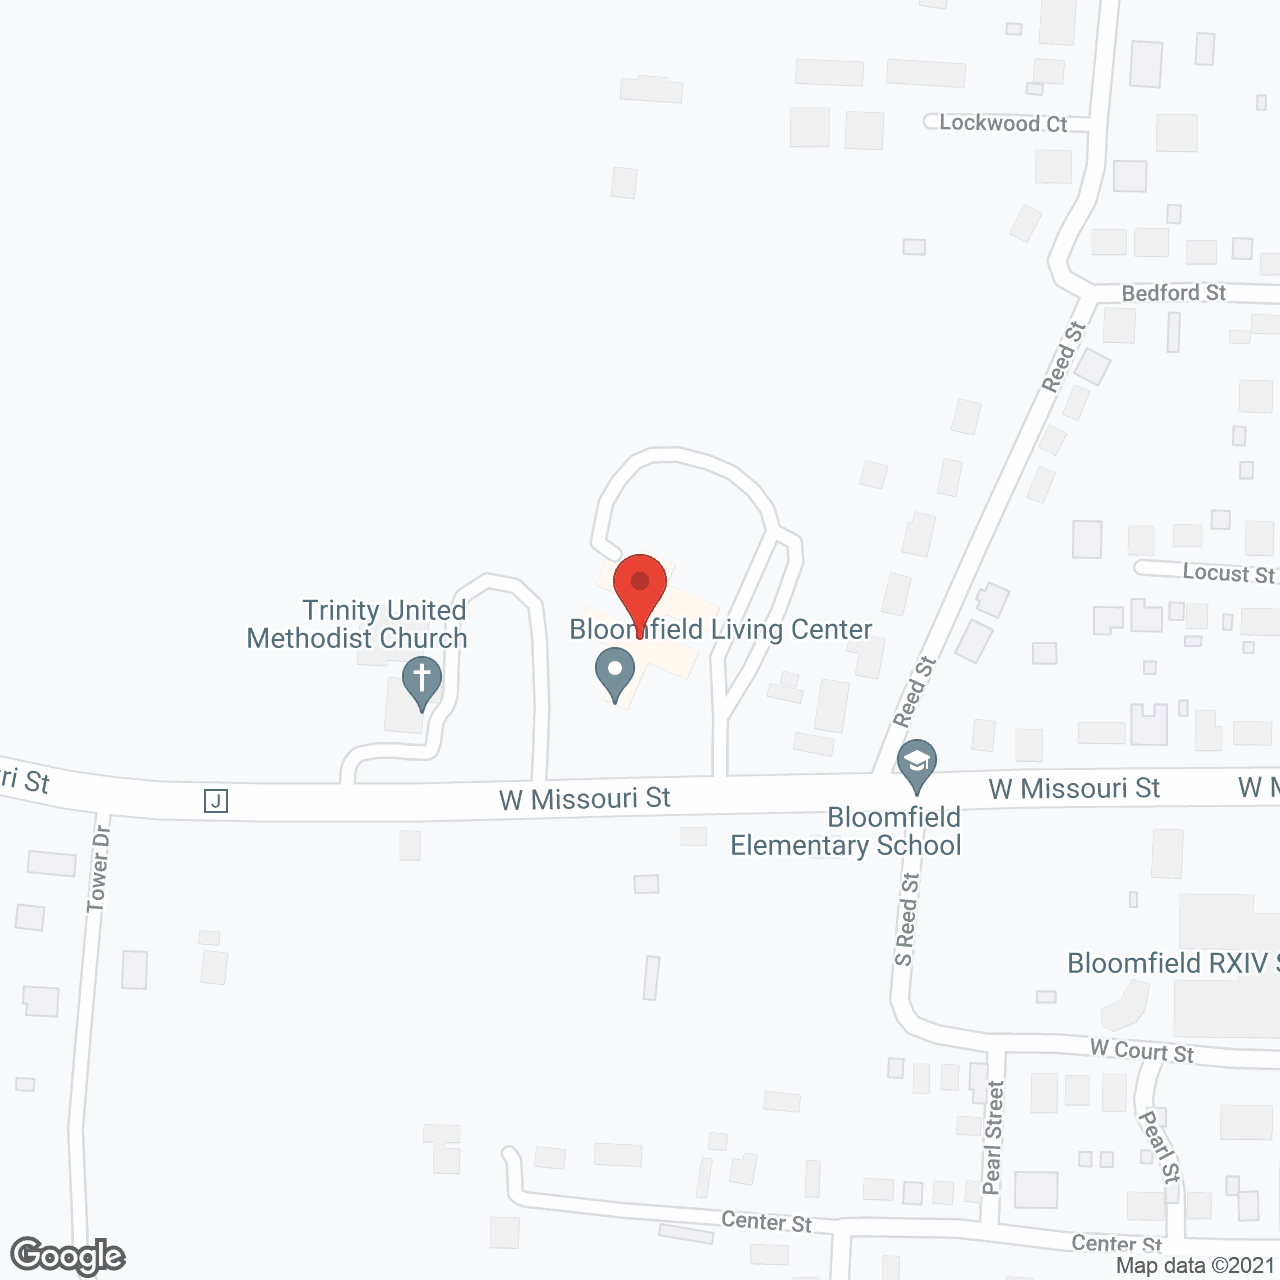 Golden LivingCenter - Bloomfield in google map